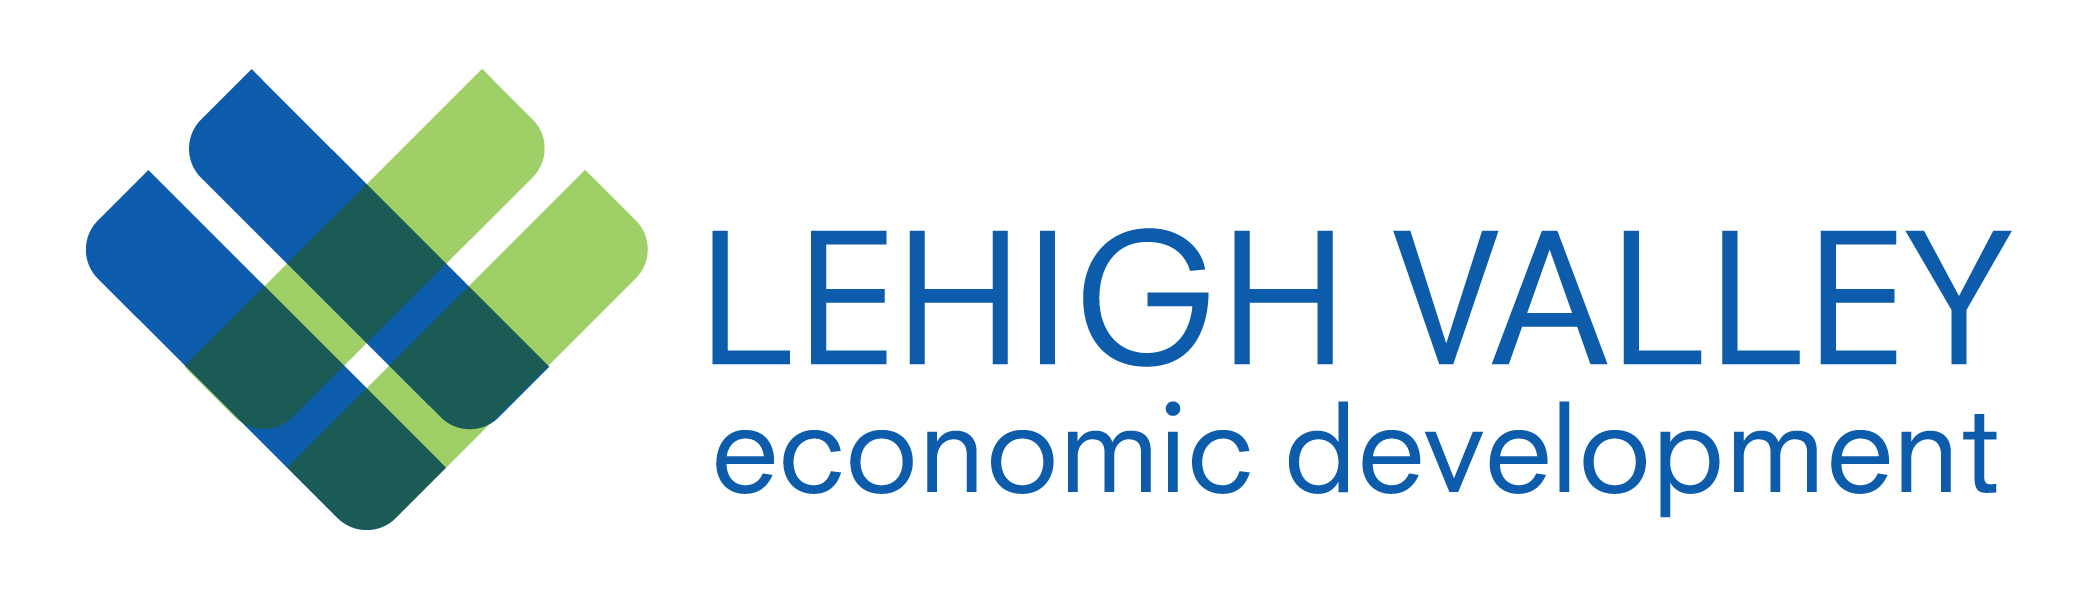 Lehigh Valley economic development logo